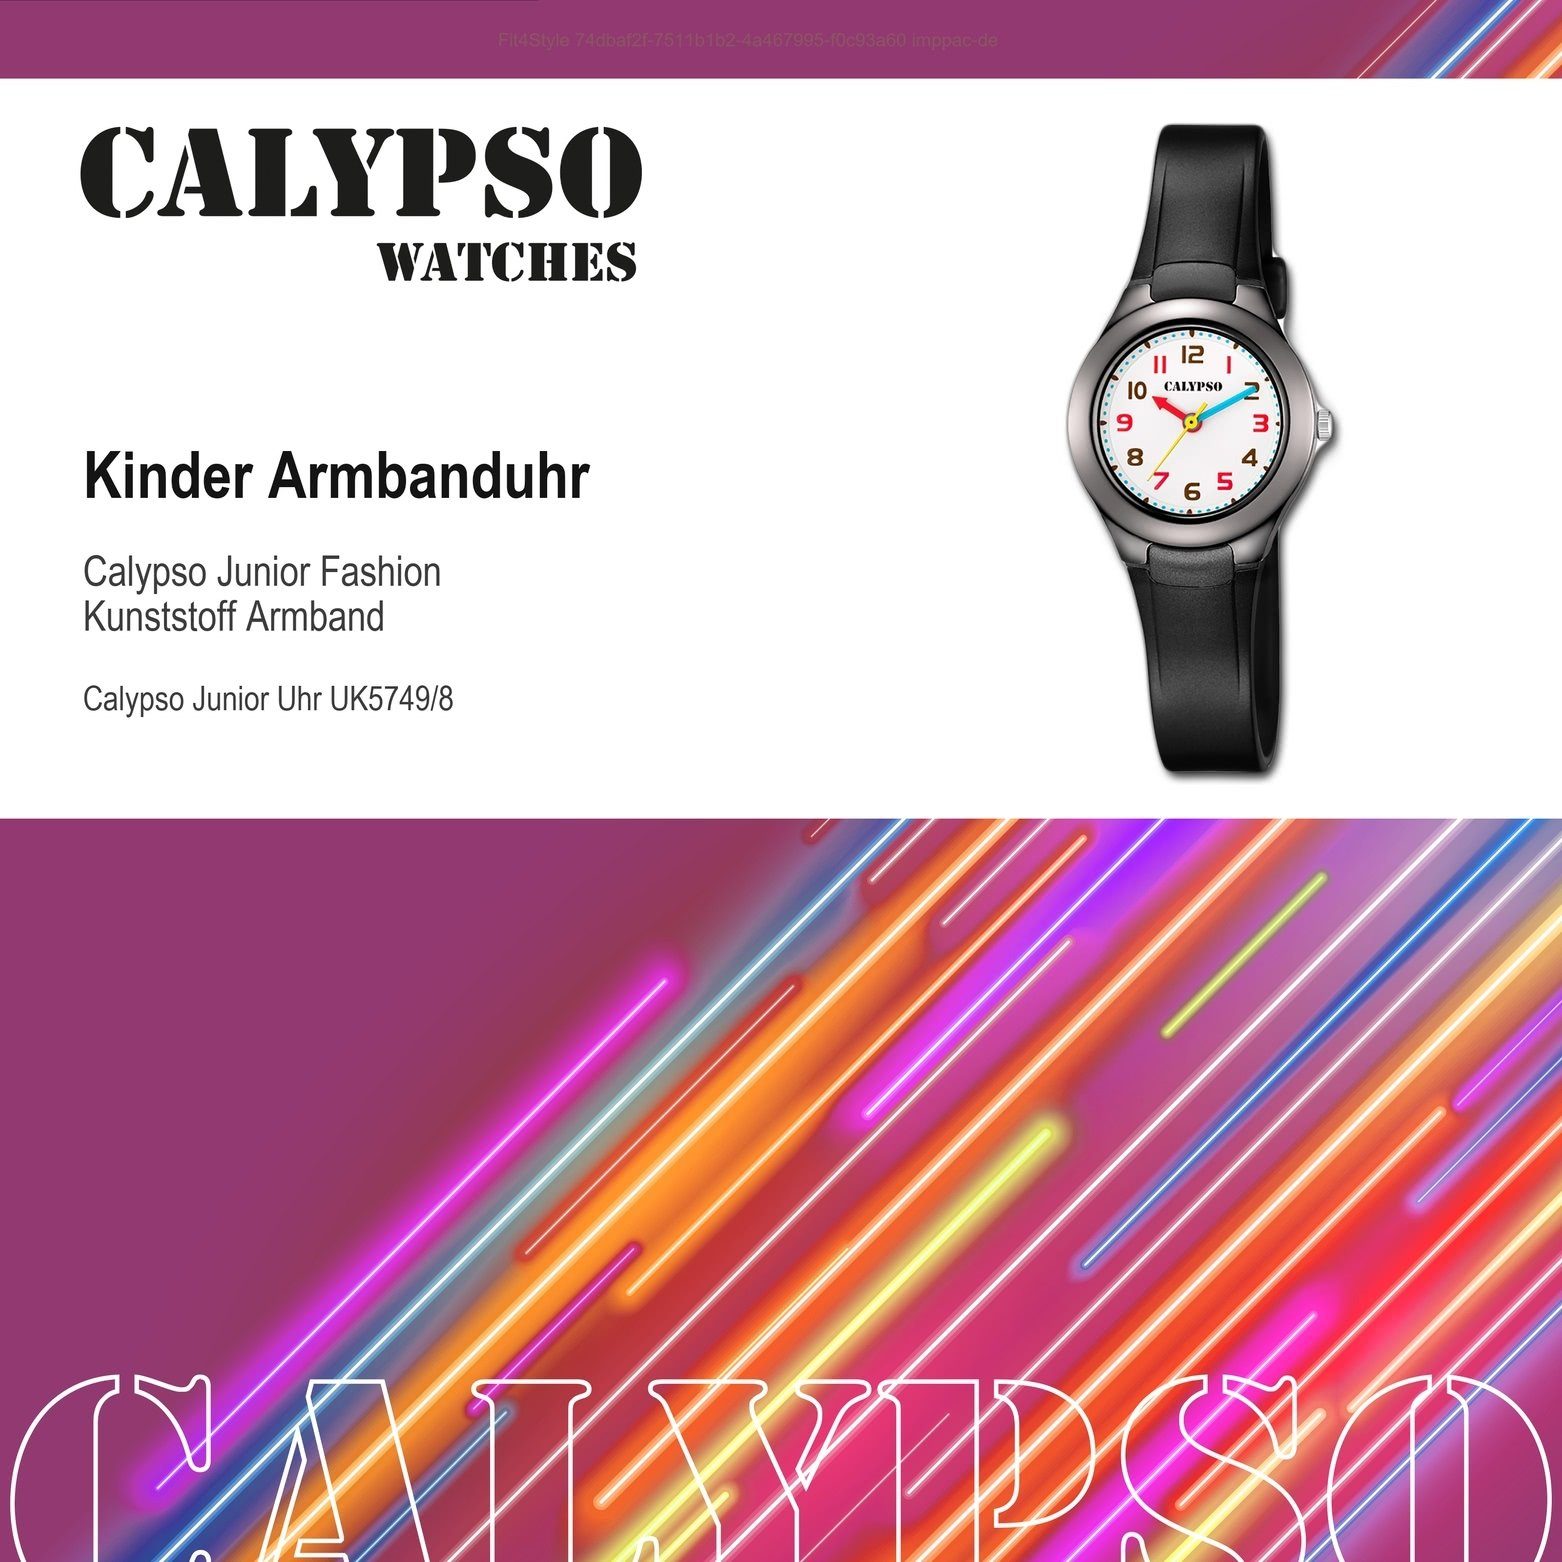 CALYPSO PU, WATCHES Fashion Kunststoff, Calypso rund, Kinder PUarmband Quarzuhr K5749/8 Armbanduhr schwarz, Kunststoff Kinder Uhr